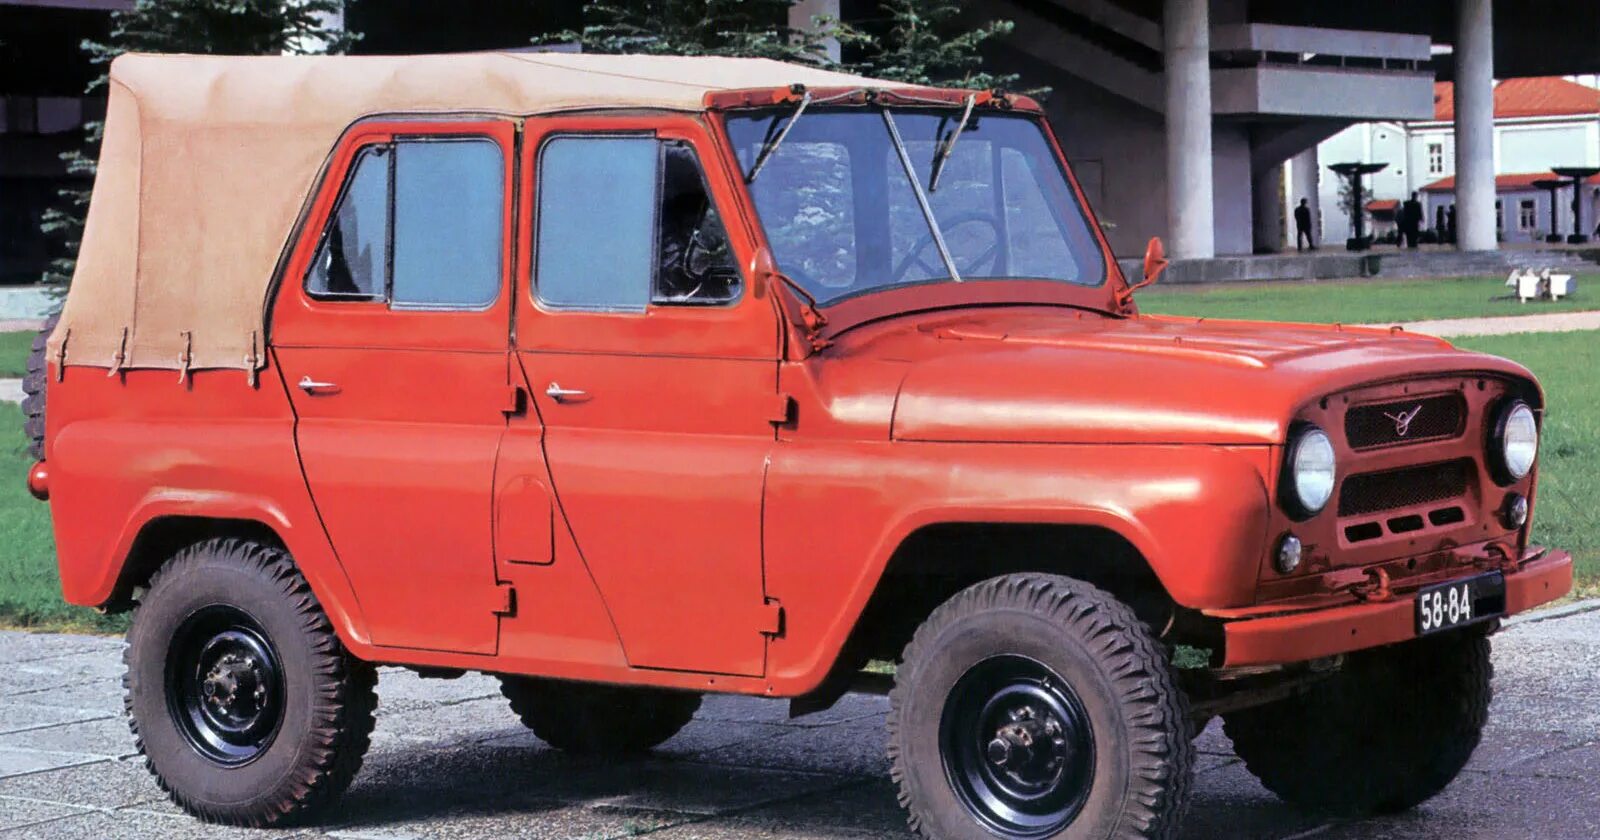 УАЗ 469. УАЗ-469 внедорожник. УАЗ 469 красный. УАЗ 469 1972.